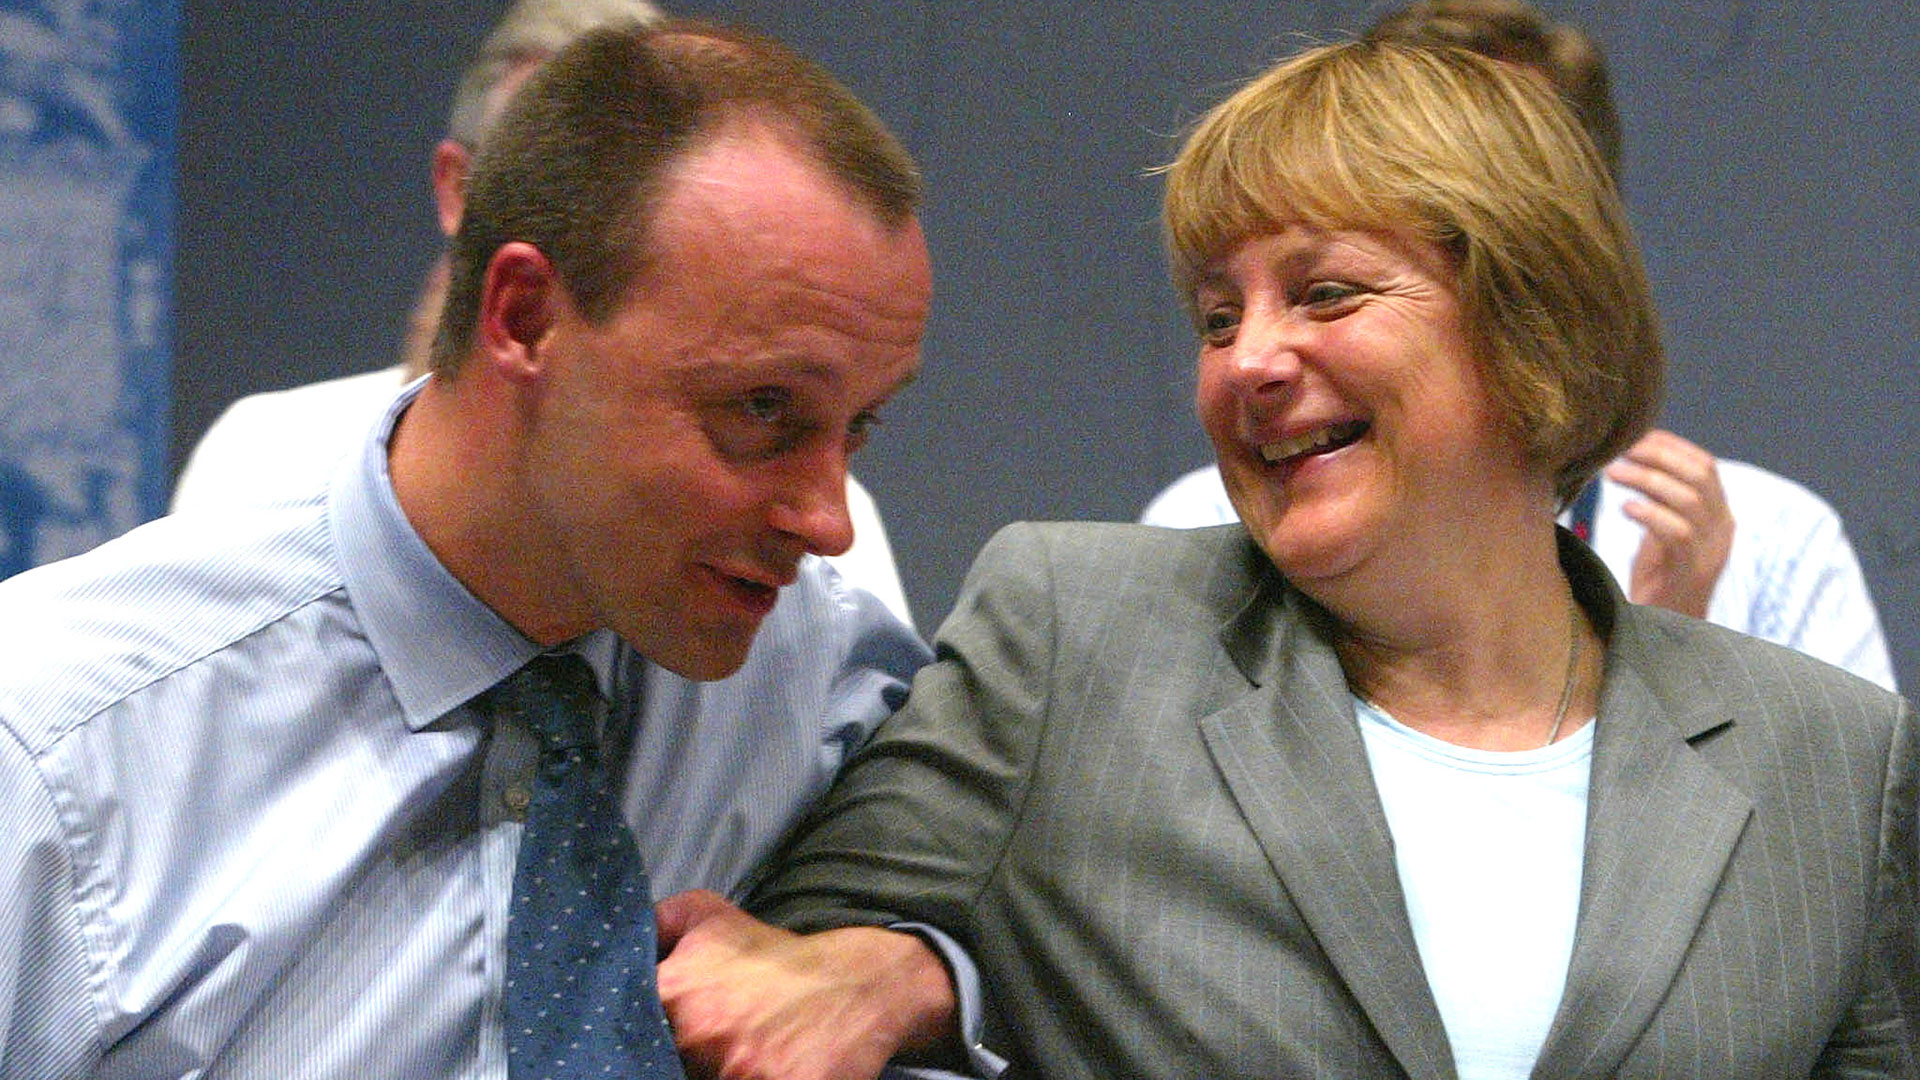 Friedrich Merz y Angela Merkel años atrás (Reuters)